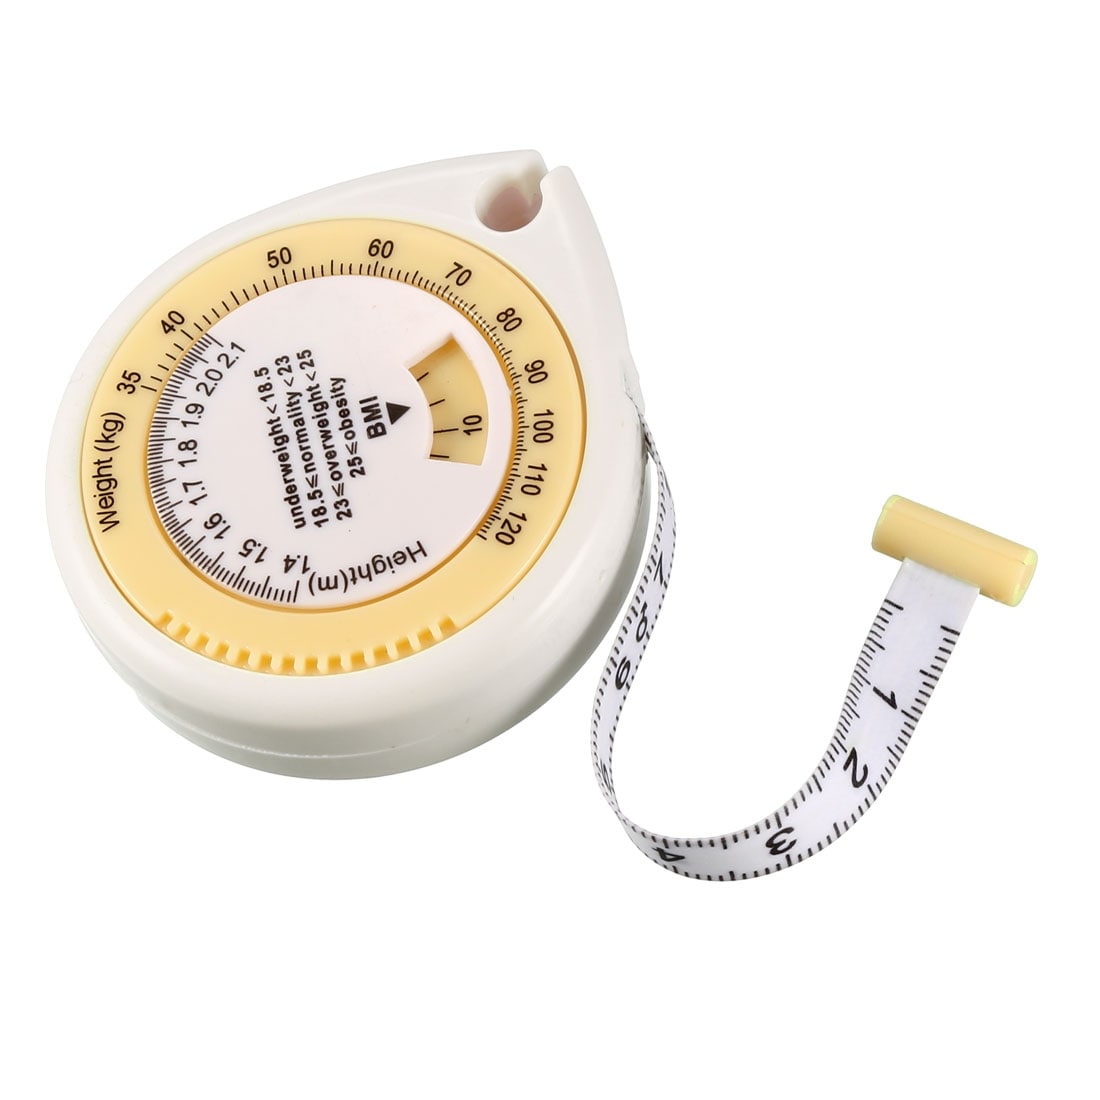 BMI Locking Tape Measure (mm/inch)